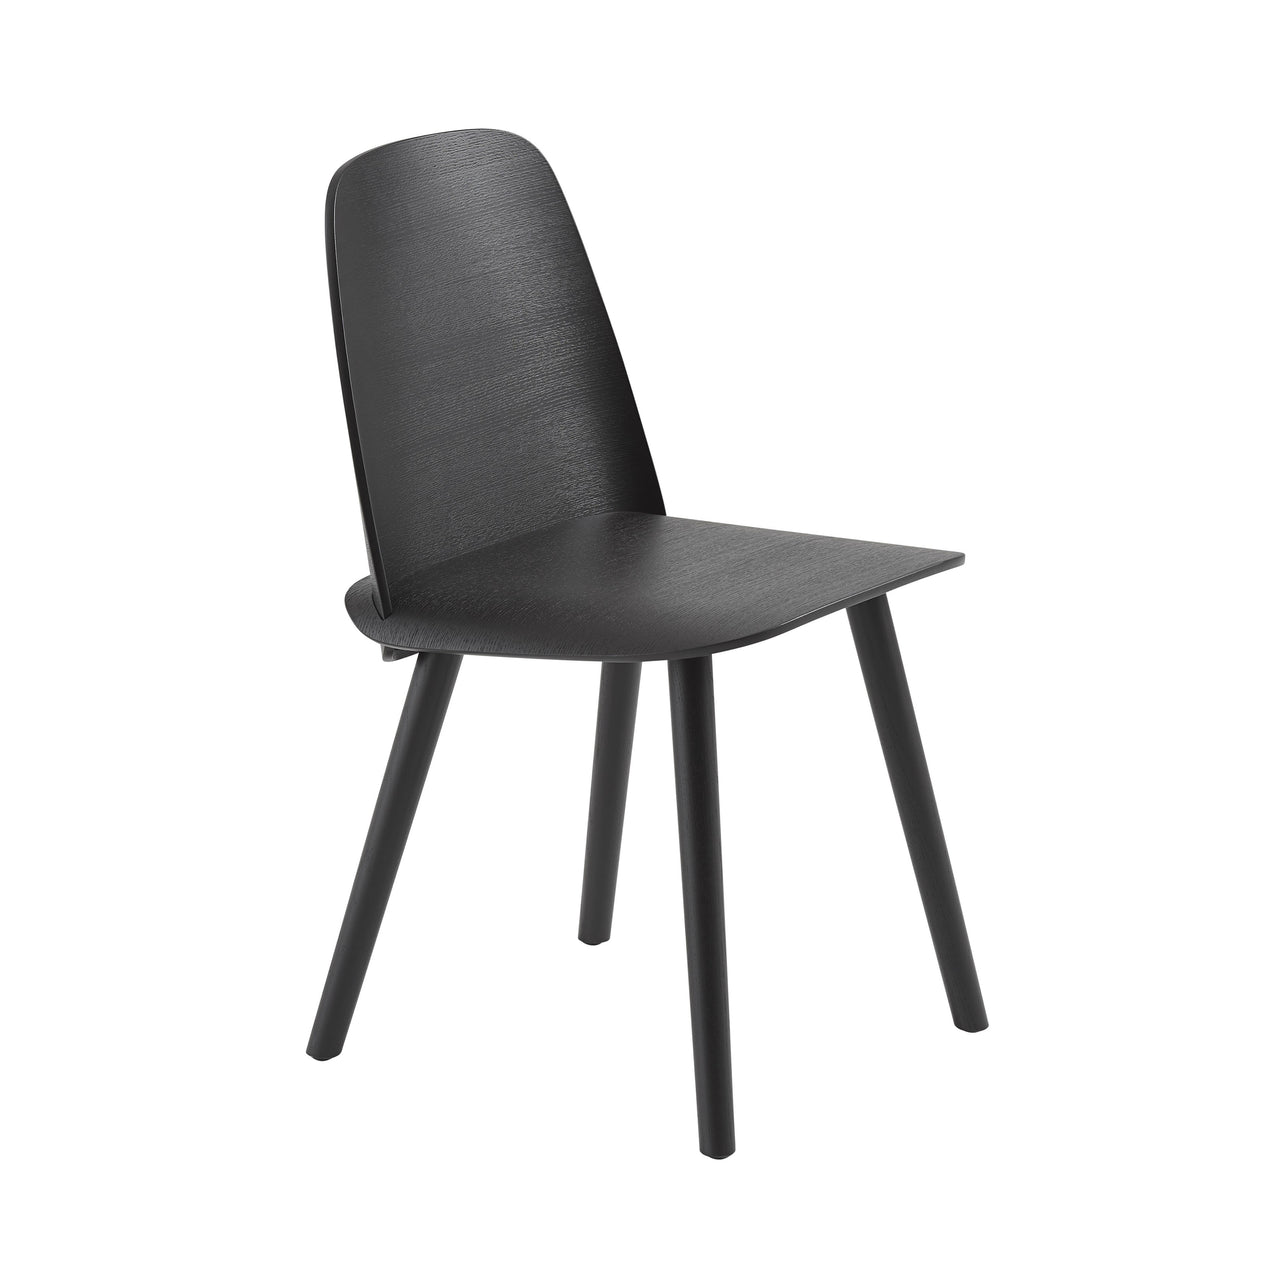 Nerd Chair: Black